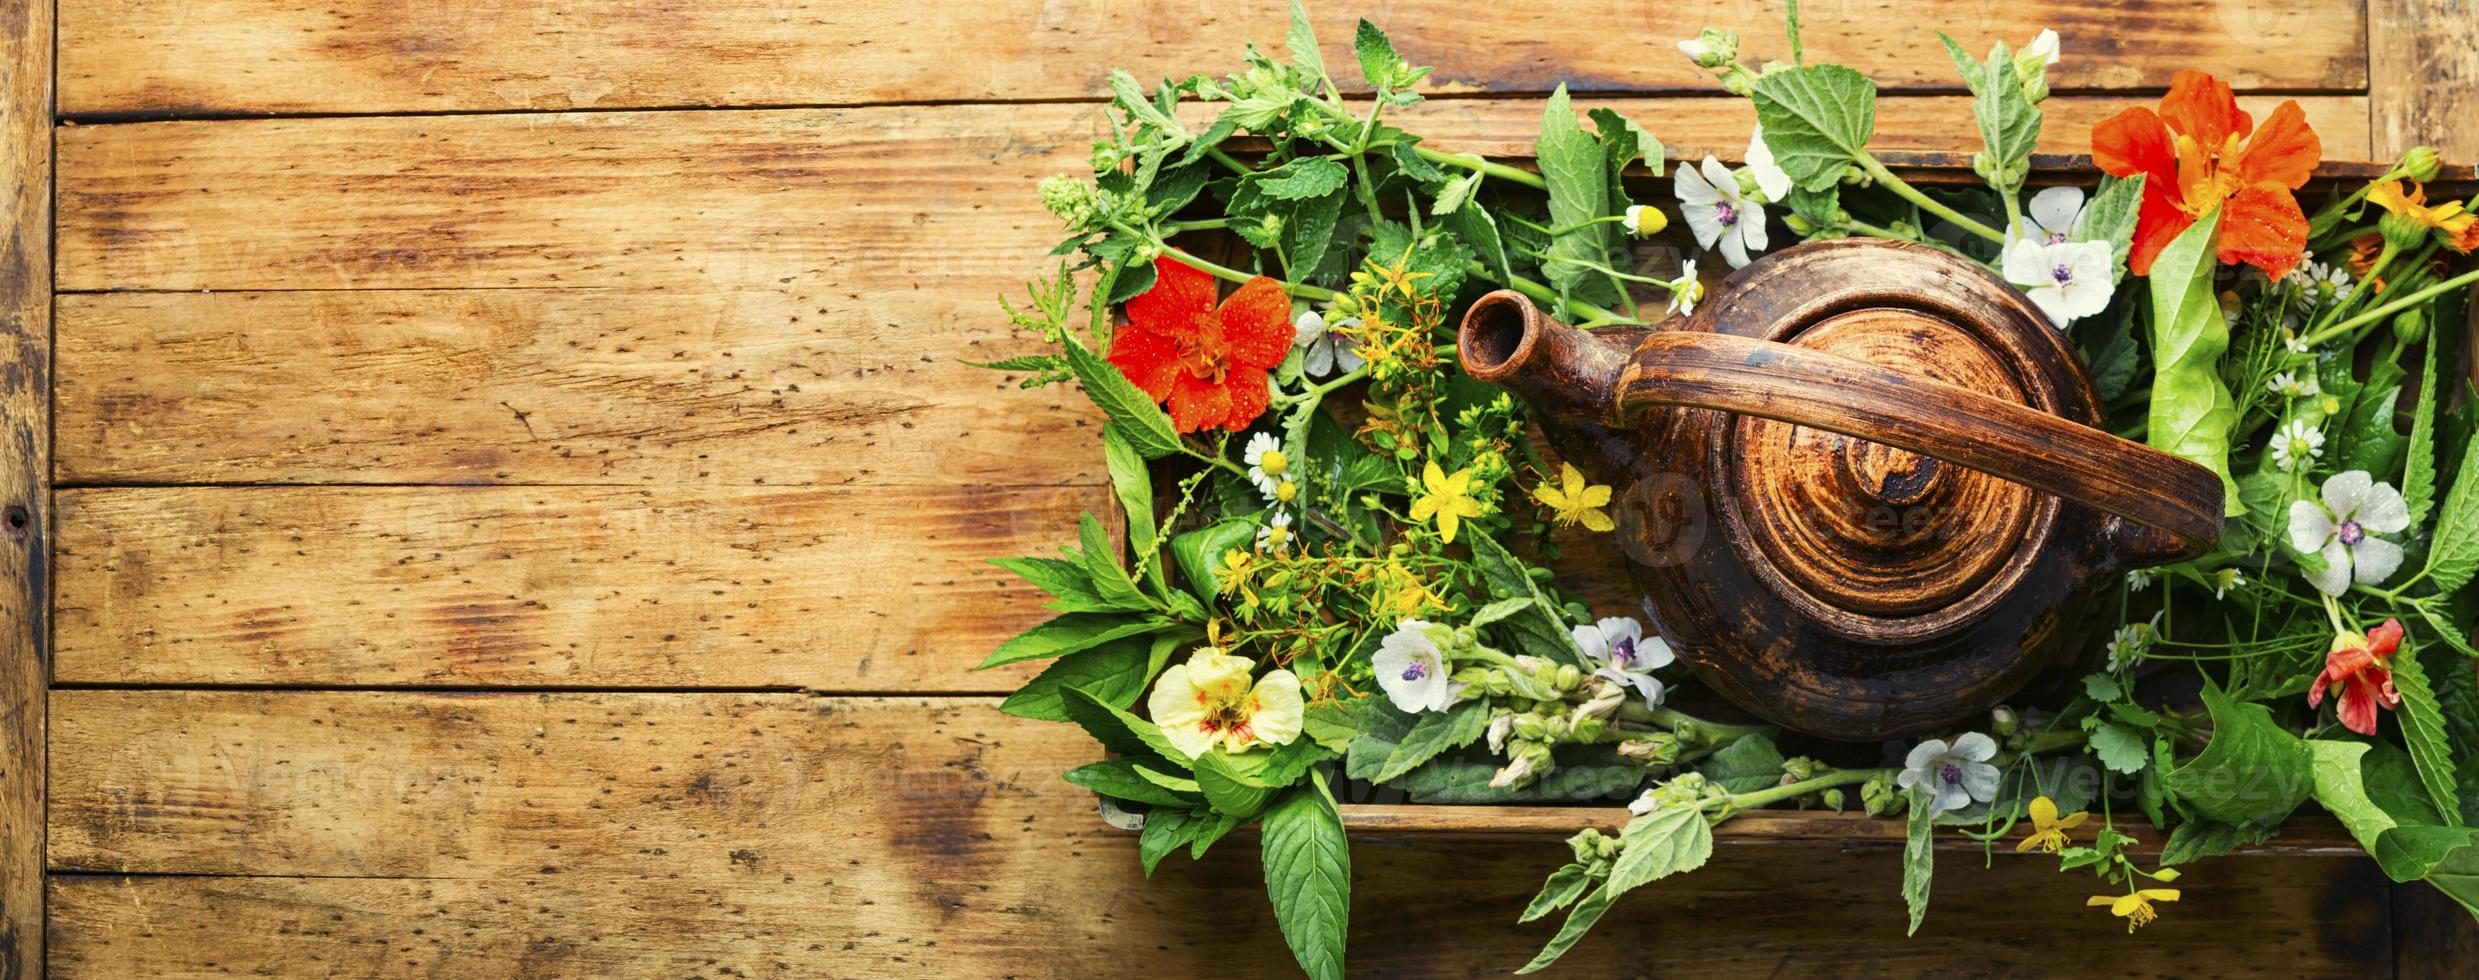 Herbal tea,flowers and herbs,medicinal herbs photo